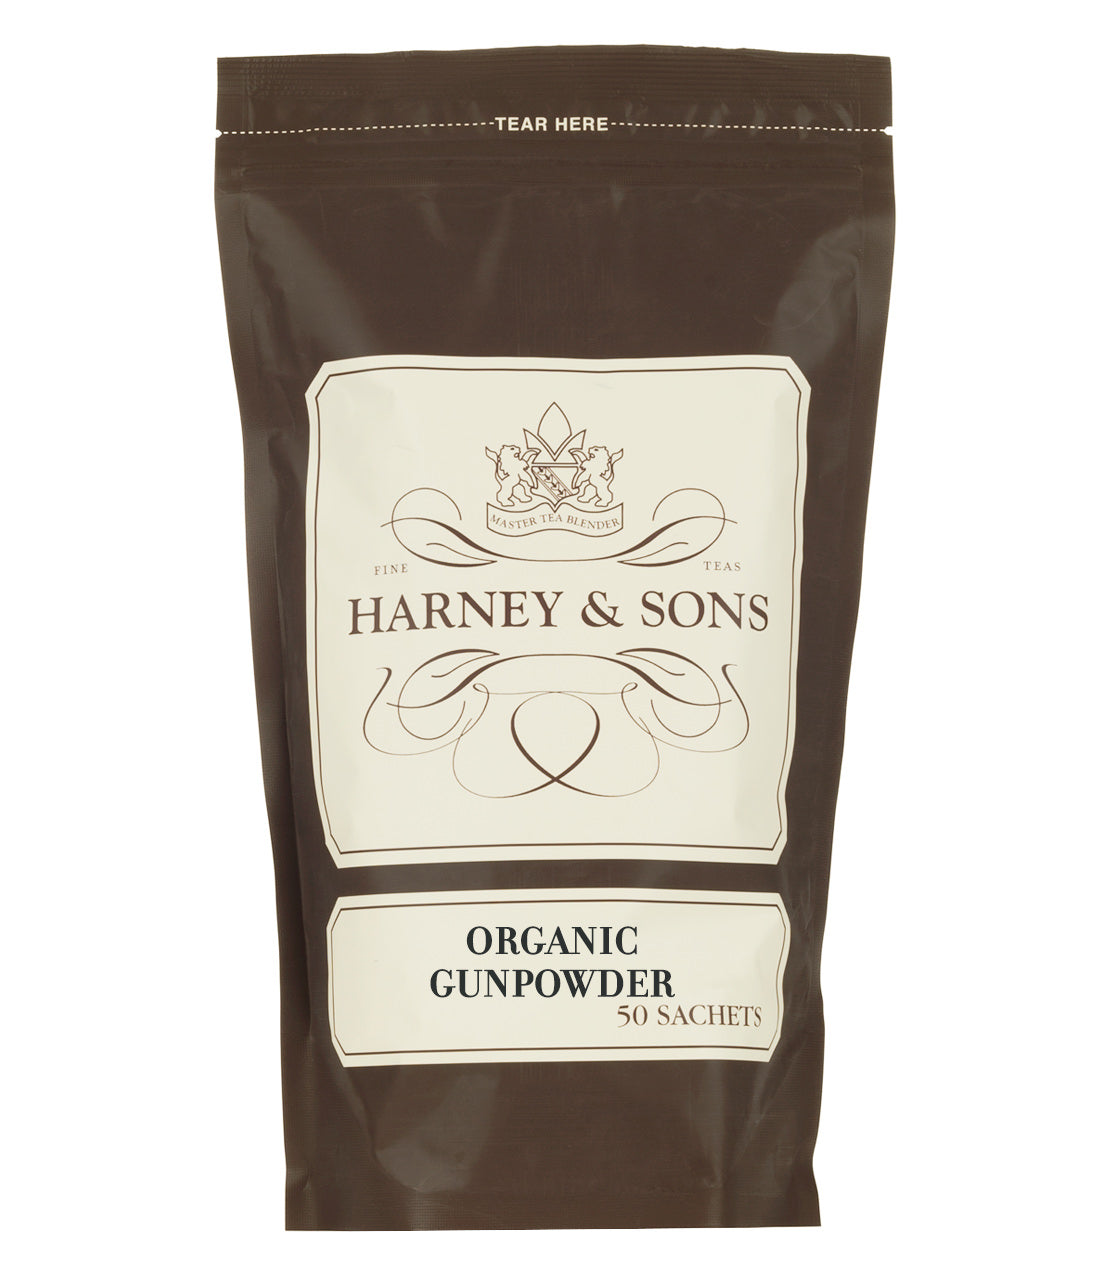 Organic Gunpowder - Sachets Bag of 50 Sachets - Harney & Sons Fine Teas